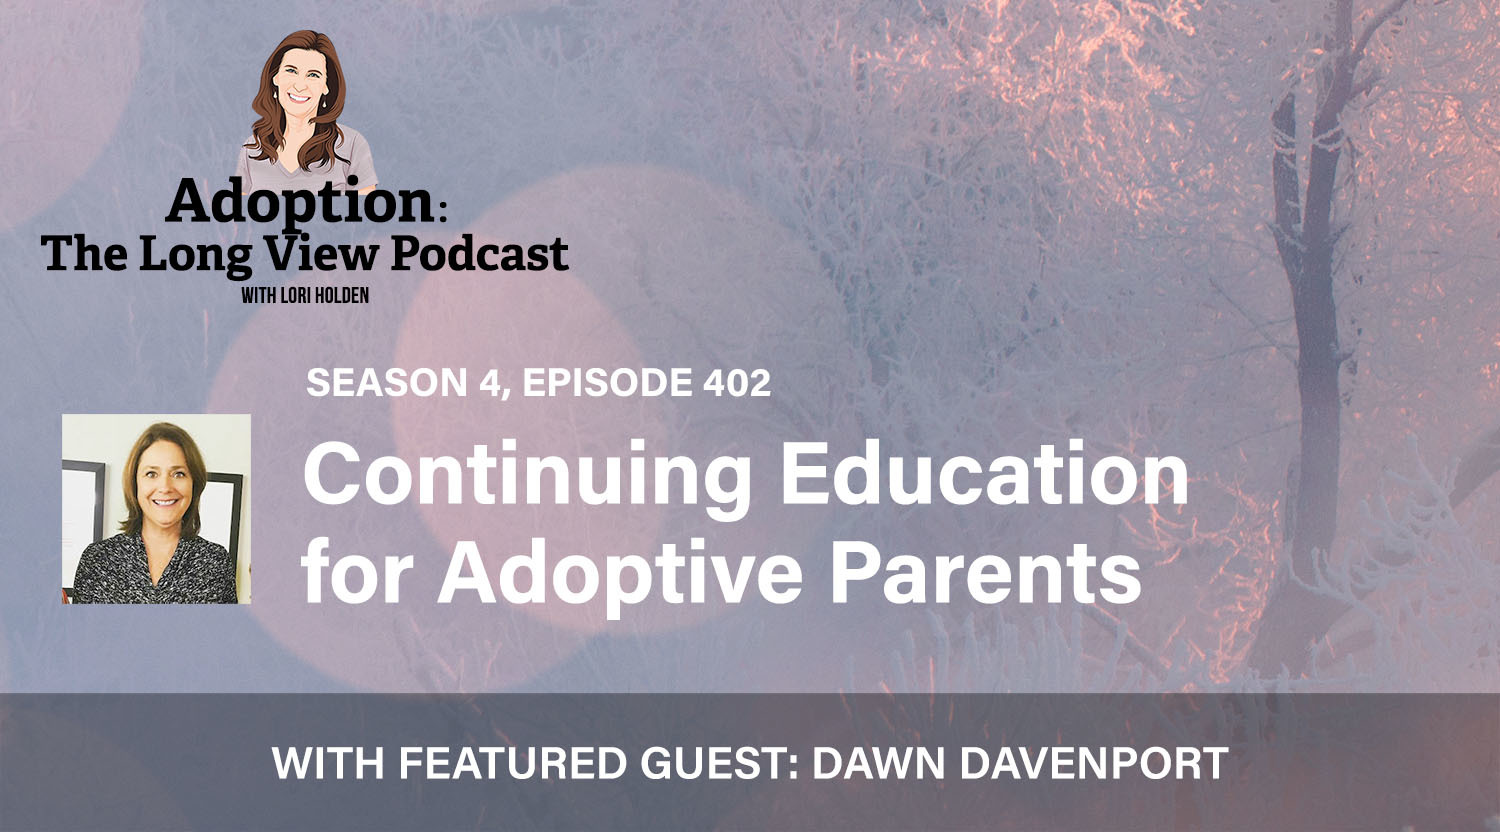 Education for adoptive parents